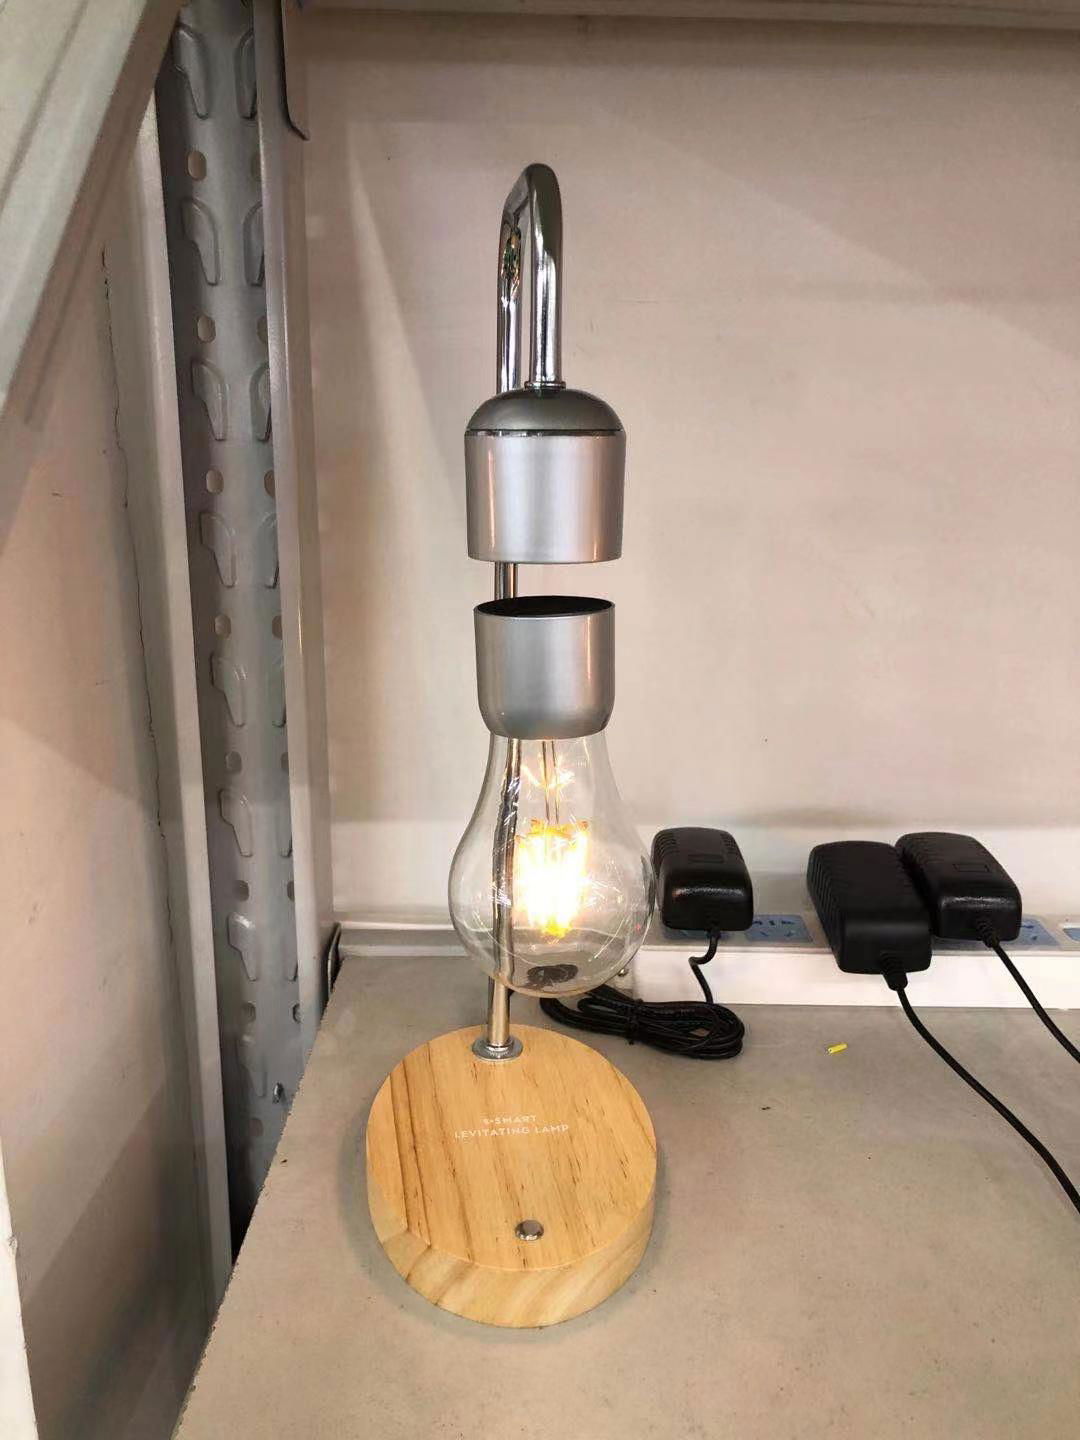 360 spinning magnetic levitation floating rotating night light lamp bulb  4